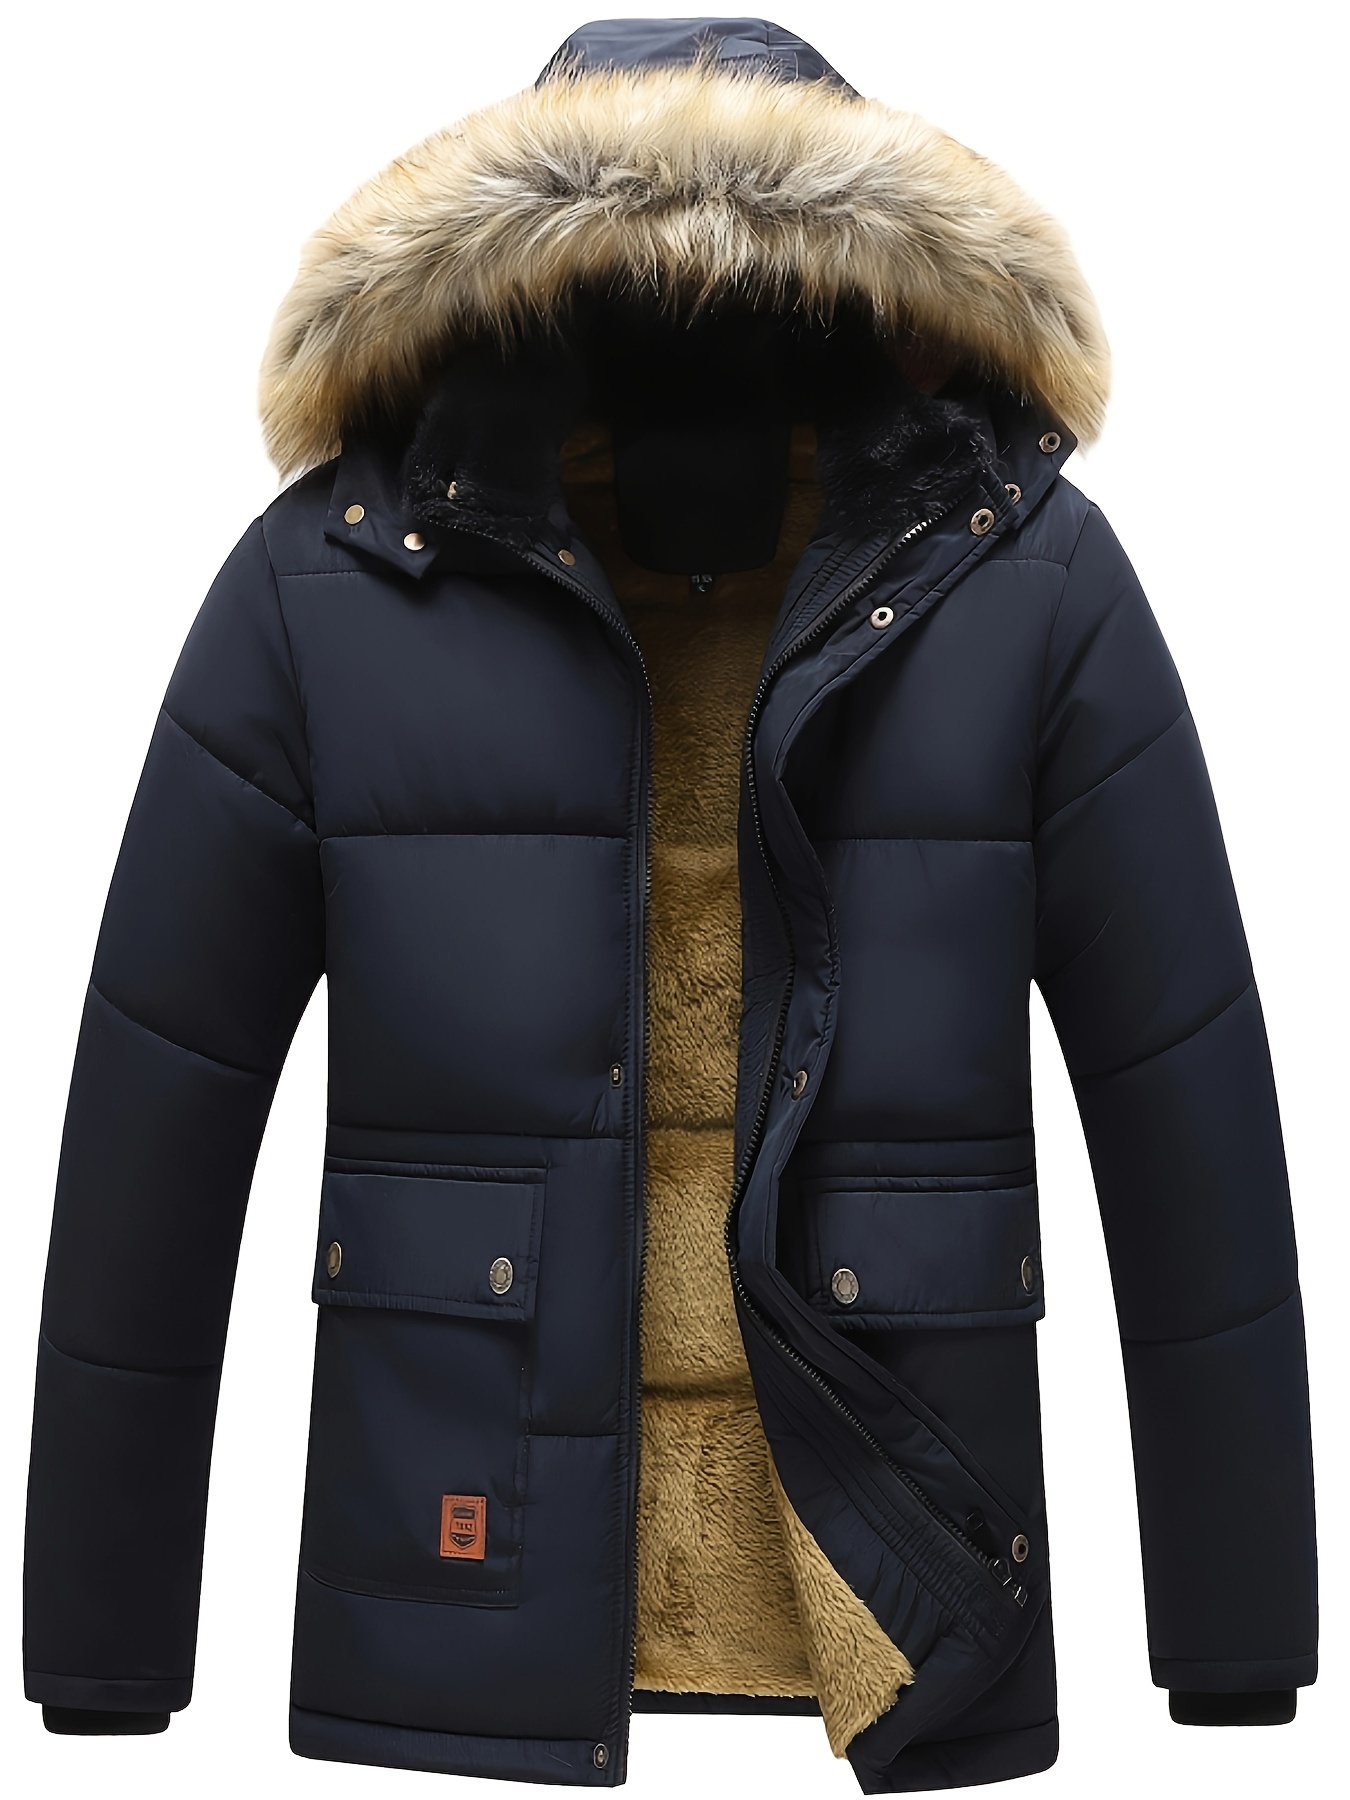 Men Winter Jackets - Buy Winter Jackets for Men Online